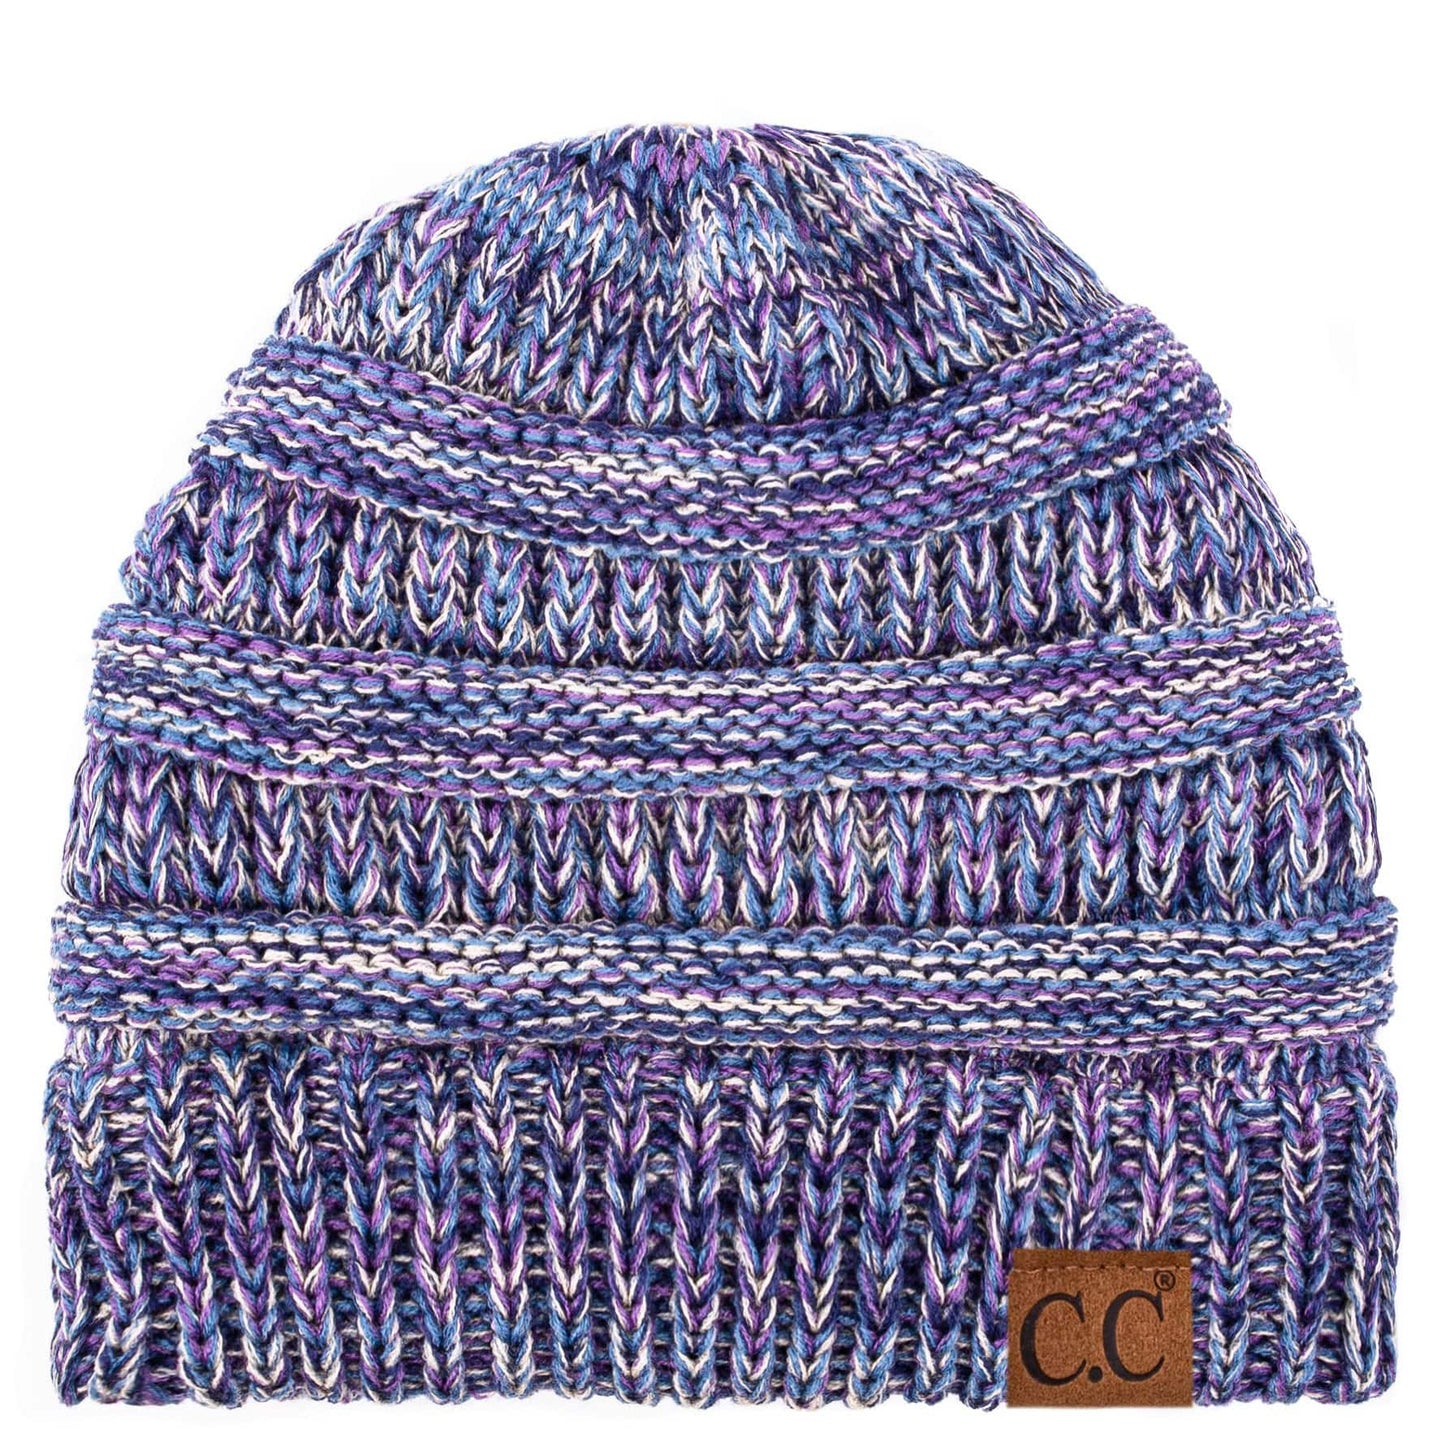 C.C Apparel Blue/Purple/Grey C.C Trendy Warm Chunky Soft Stretch Three-Toned Cable Knit Beanie Skully